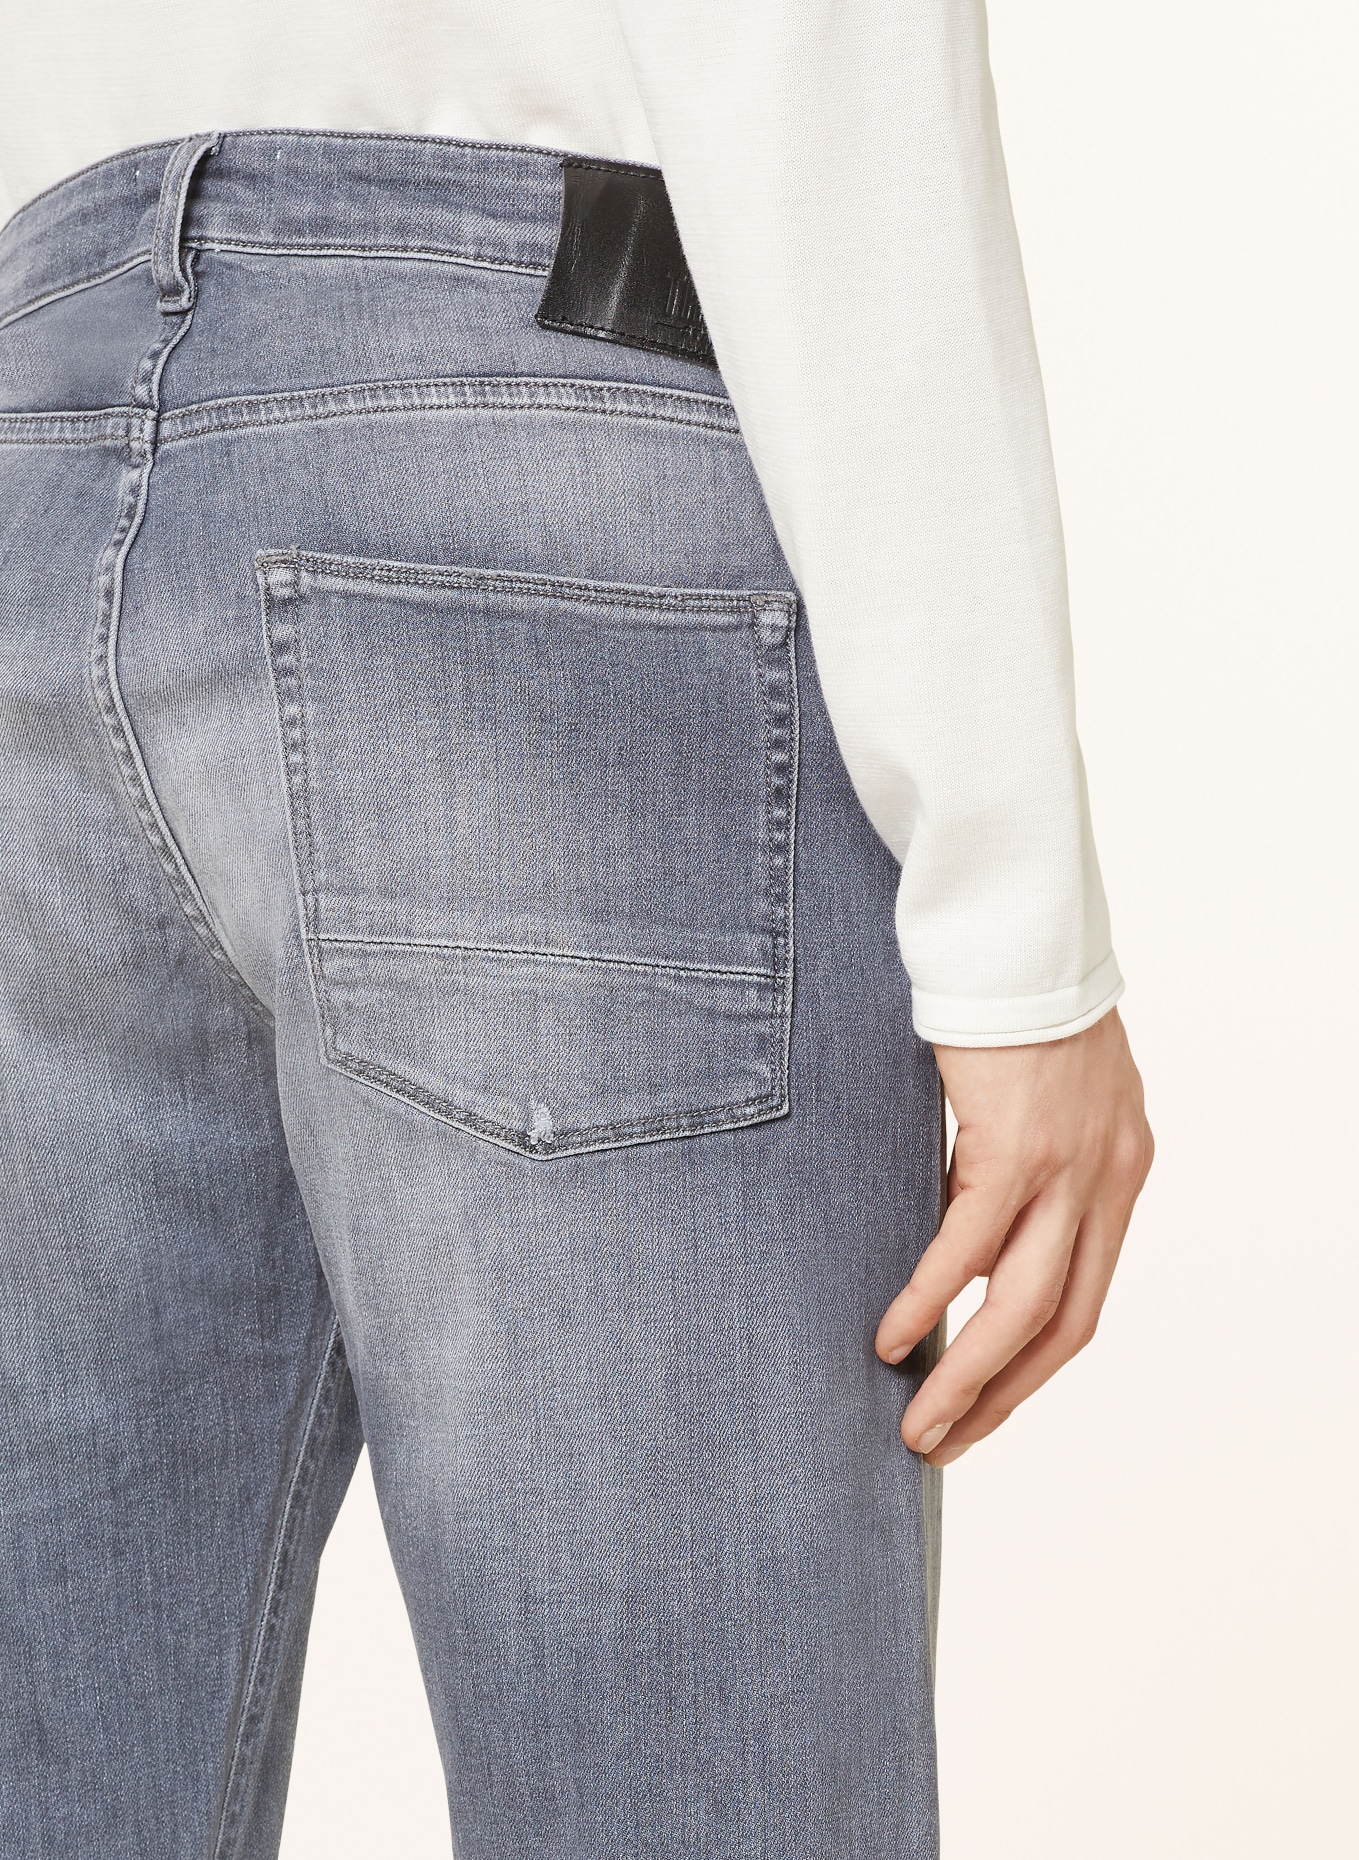 THE.NIM STANDARD Jeans MORRISON Tapered Slim Fit, Farbe: W718 GREY (Bild 6)